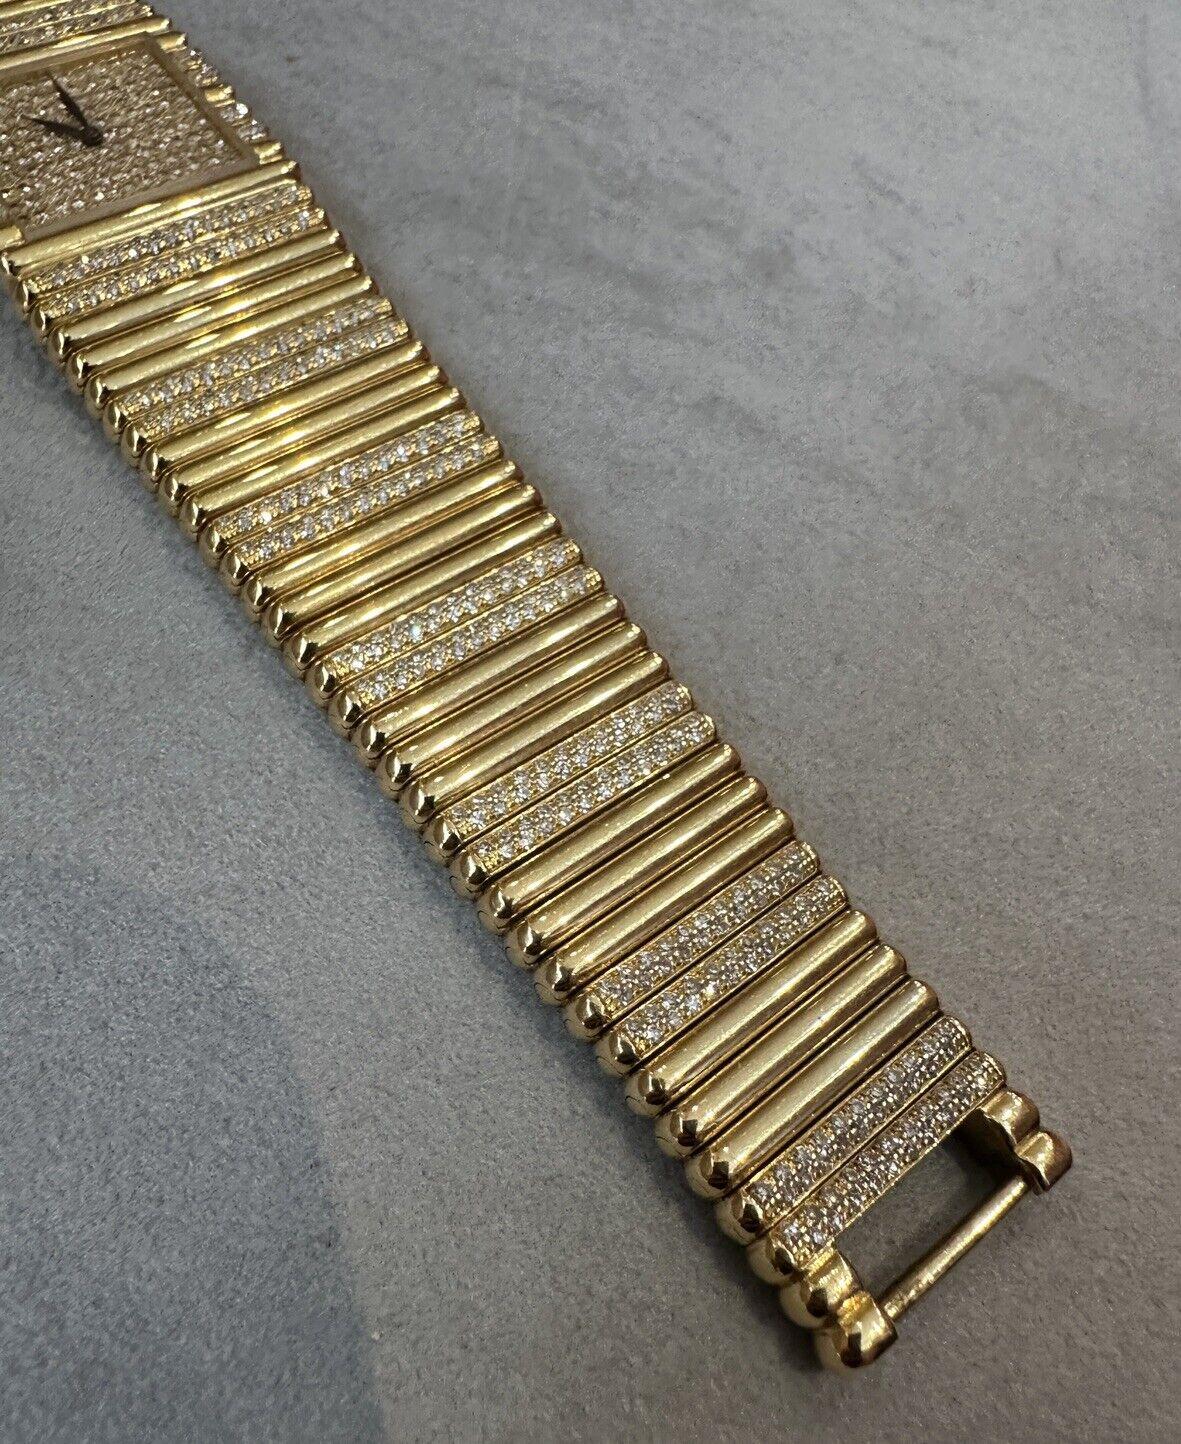 Piaget Emperador Factory Diamond and 18k Yellow Gold Watch 2